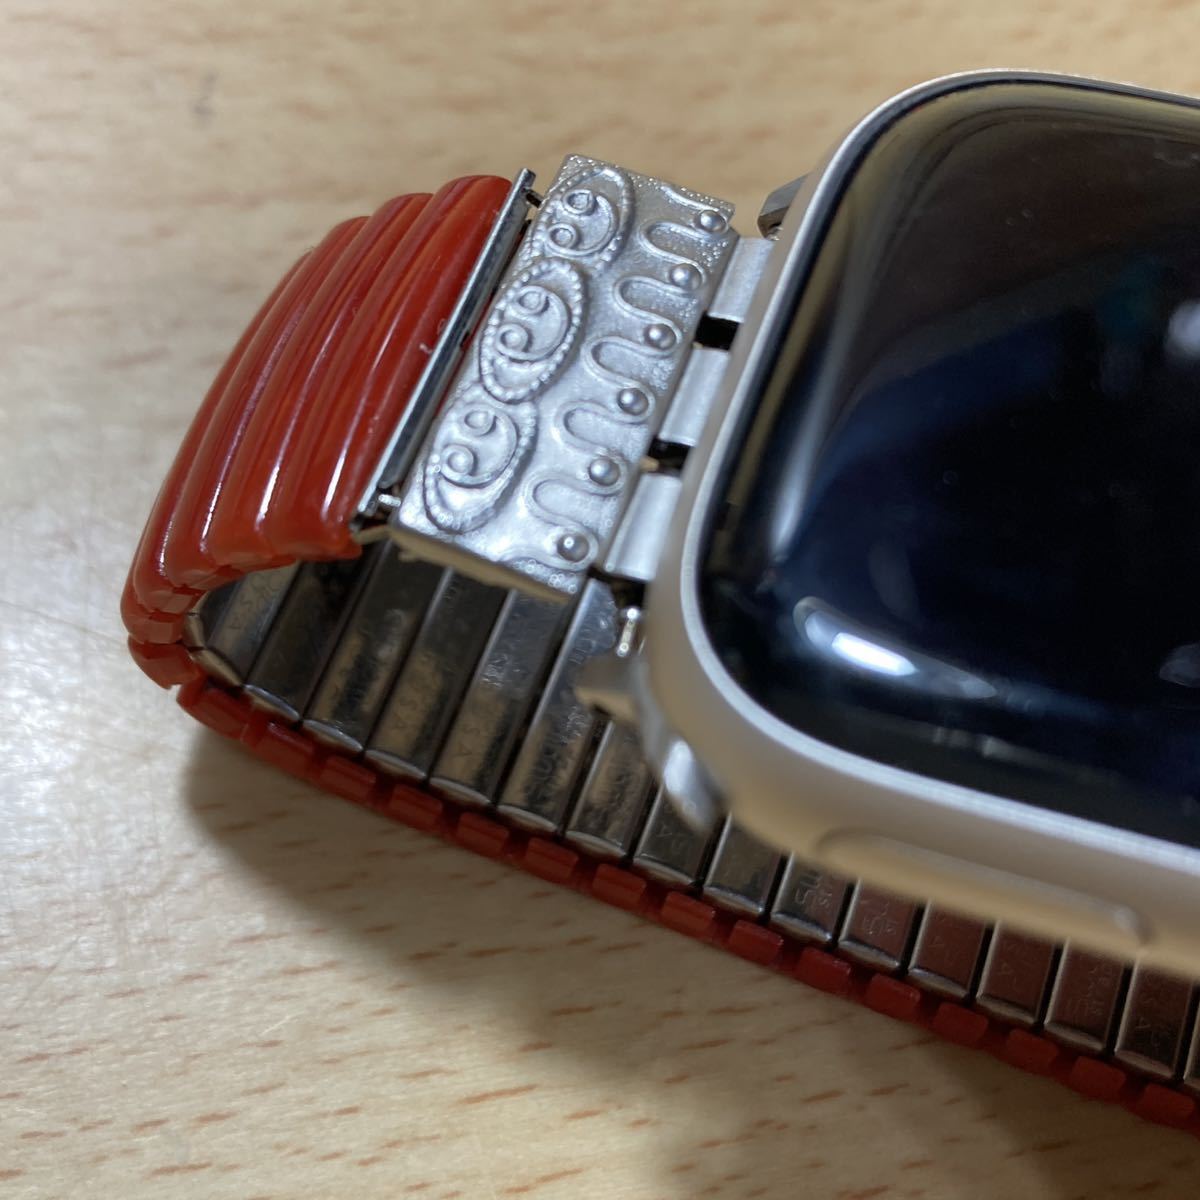 swatch 伸縮ベルト　蛇腹ベルト Apple Watch対応 SWATCH elastic expanding strap band Apple Watch conpatibleアップルウォッチバンド _ベルトのみの出品です